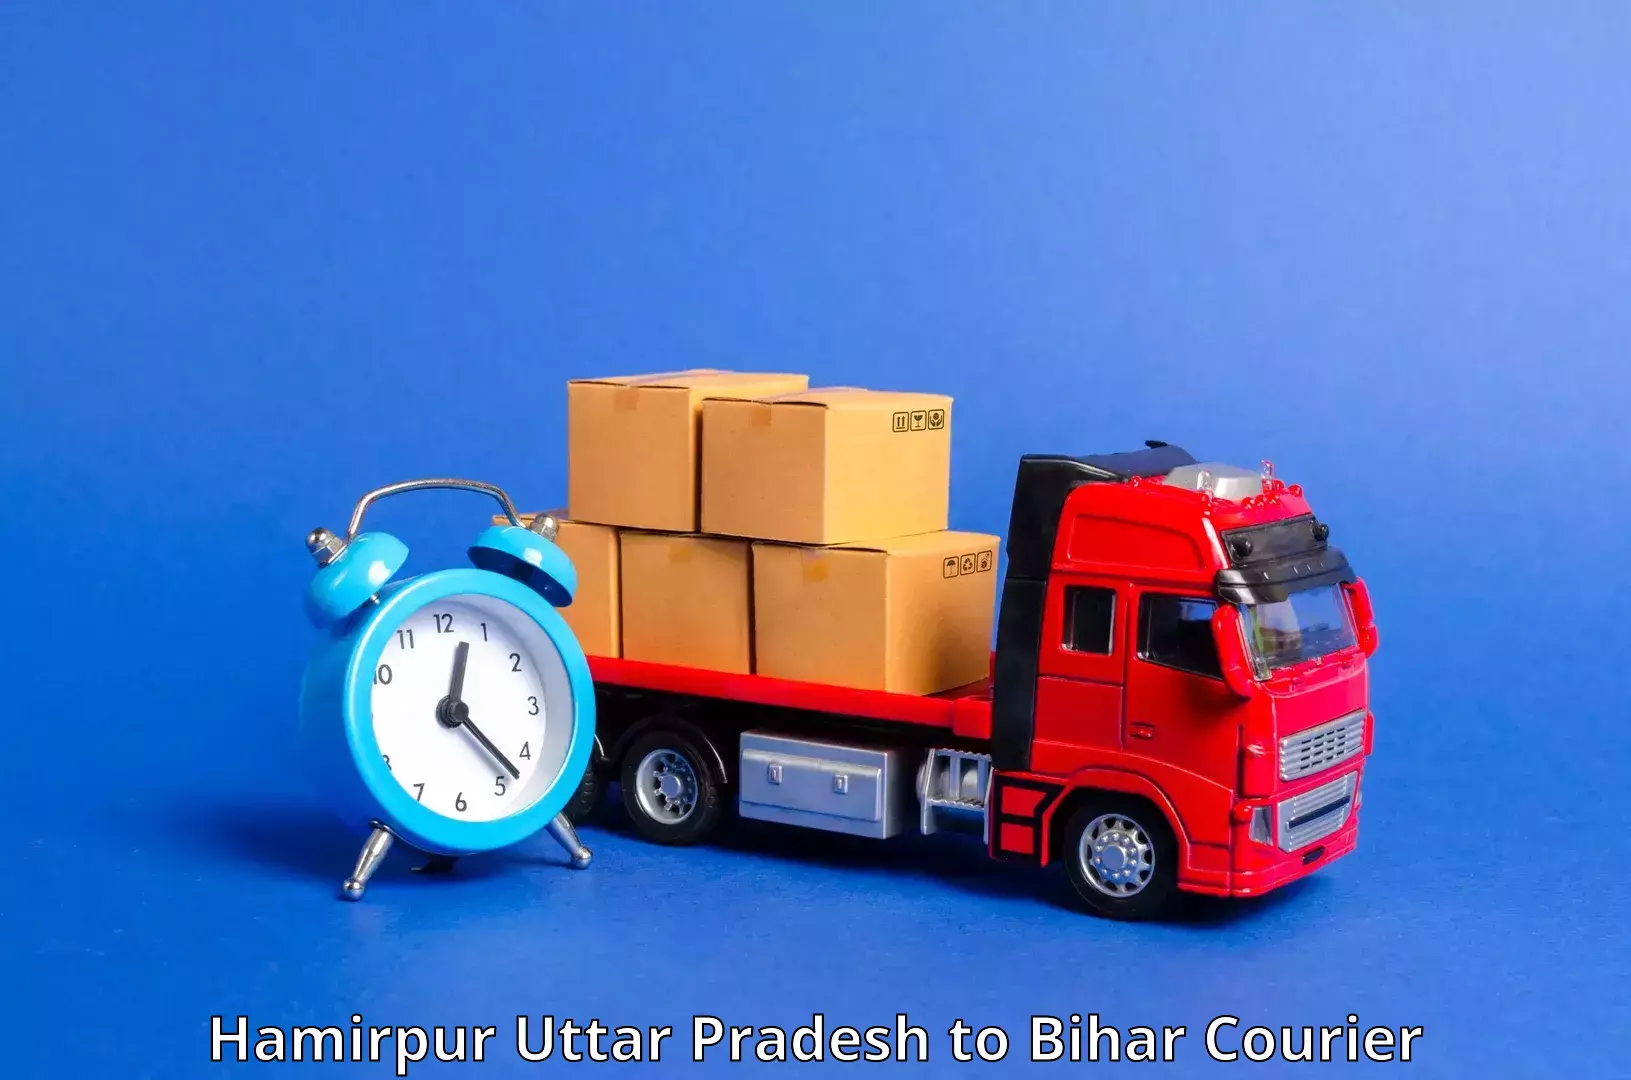 State-of-the-art courier technology Hamirpur Uttar Pradesh to Araria